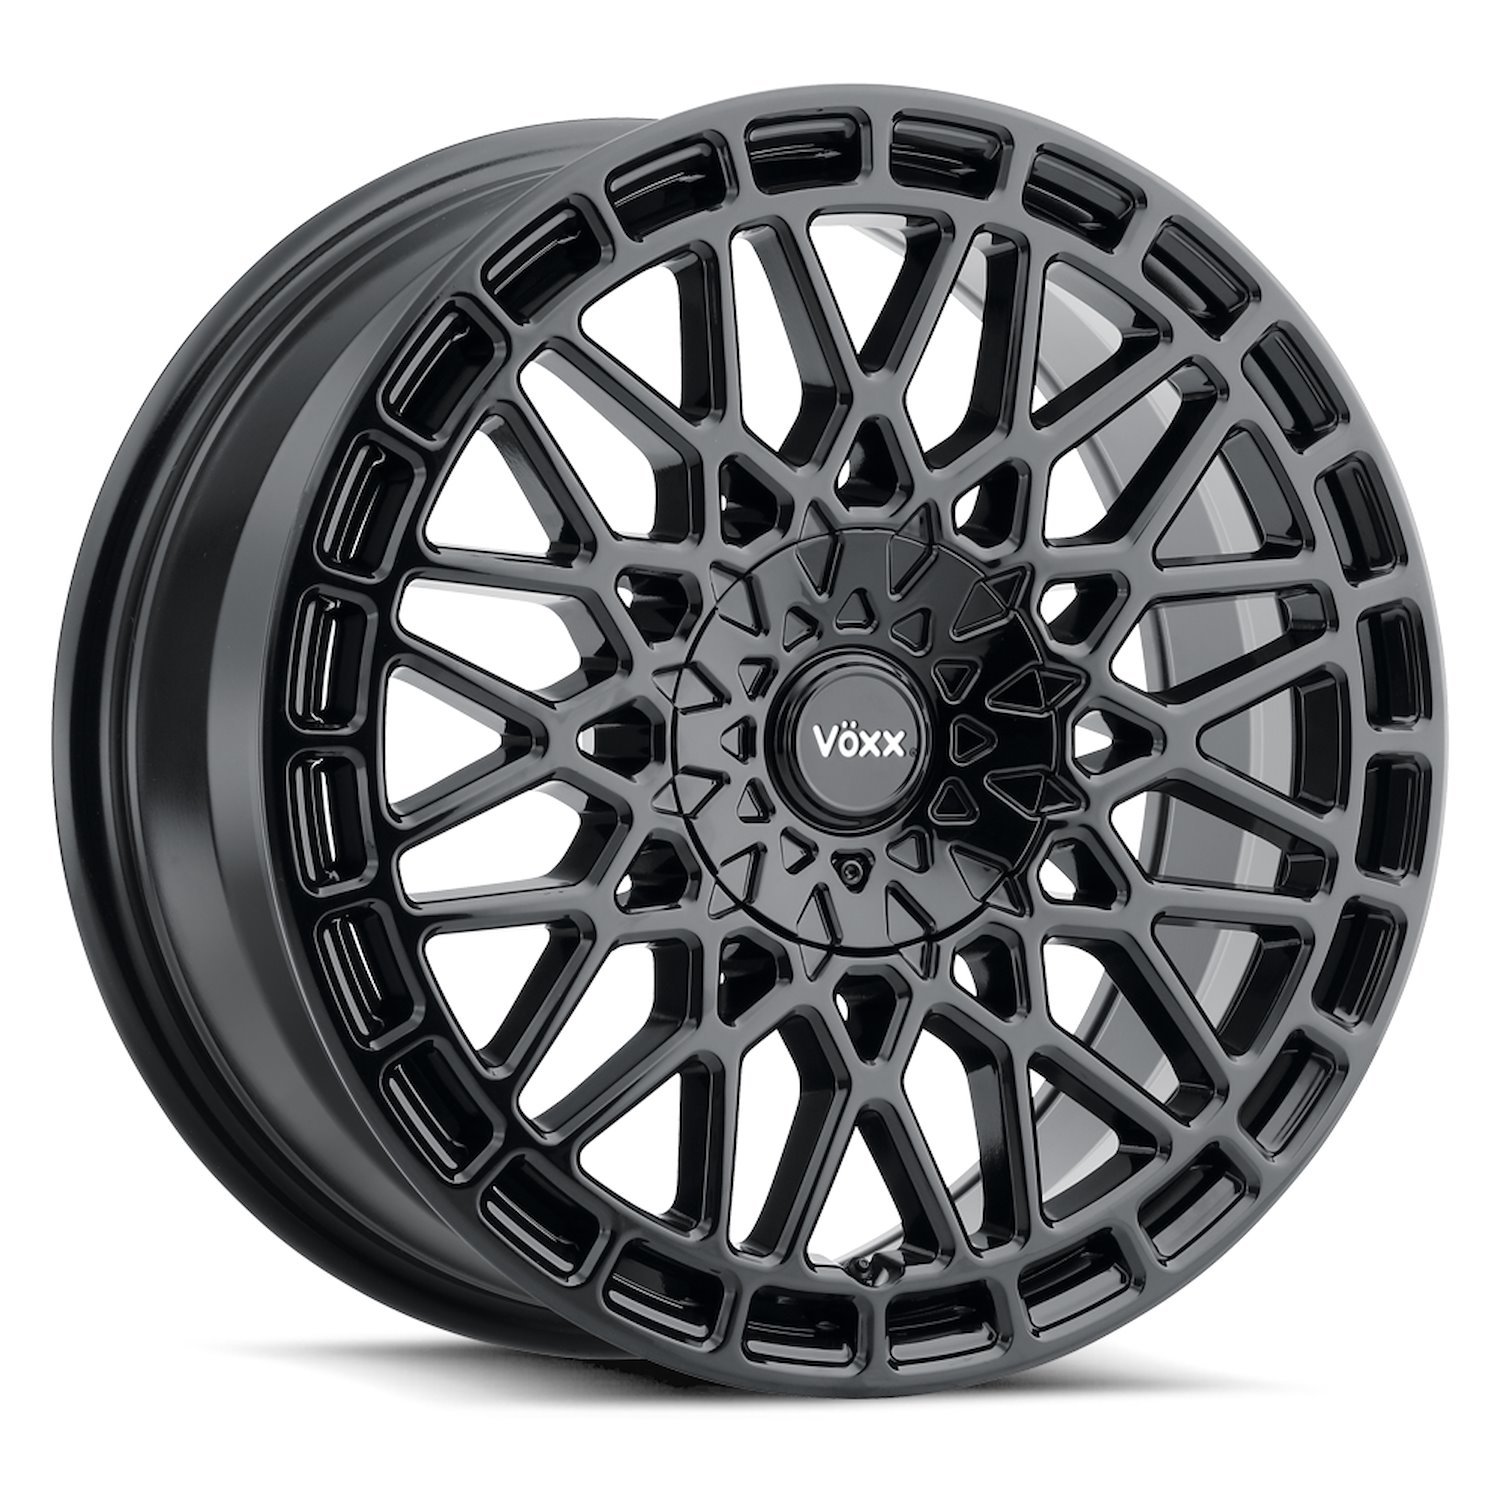 ENZ 775-5003-40 GB Enzo Wheel [Size: 17" x 7.50"] Finish: Gloss Black